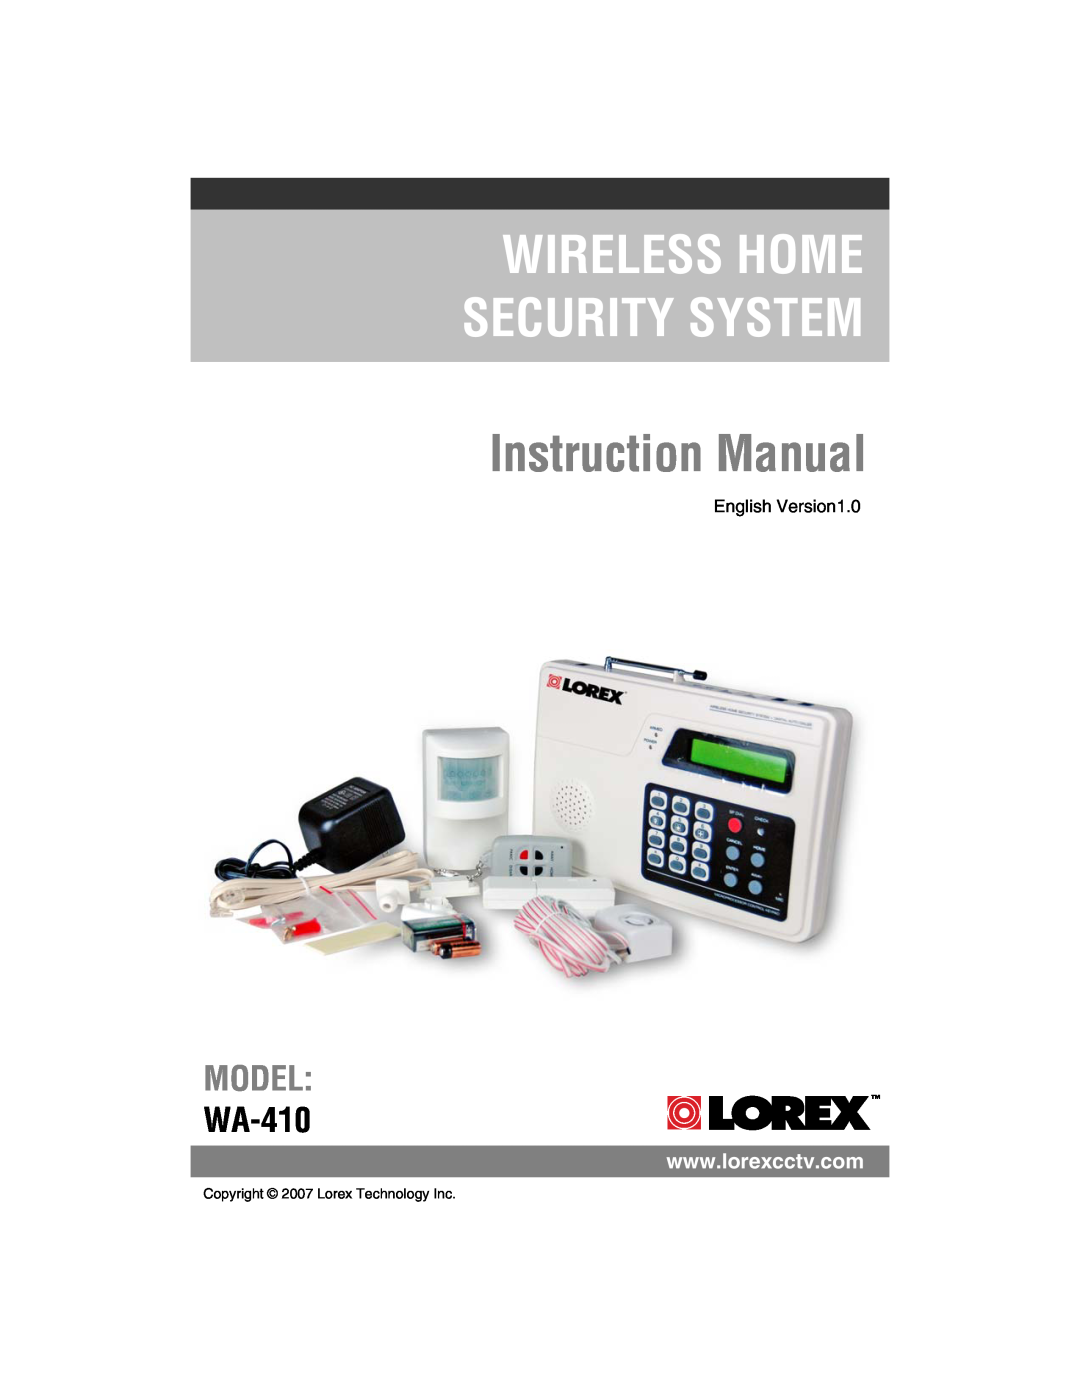 LOREX Technology WA-410 instruction manual Wireless Home Security System, Model, English Version1.0 